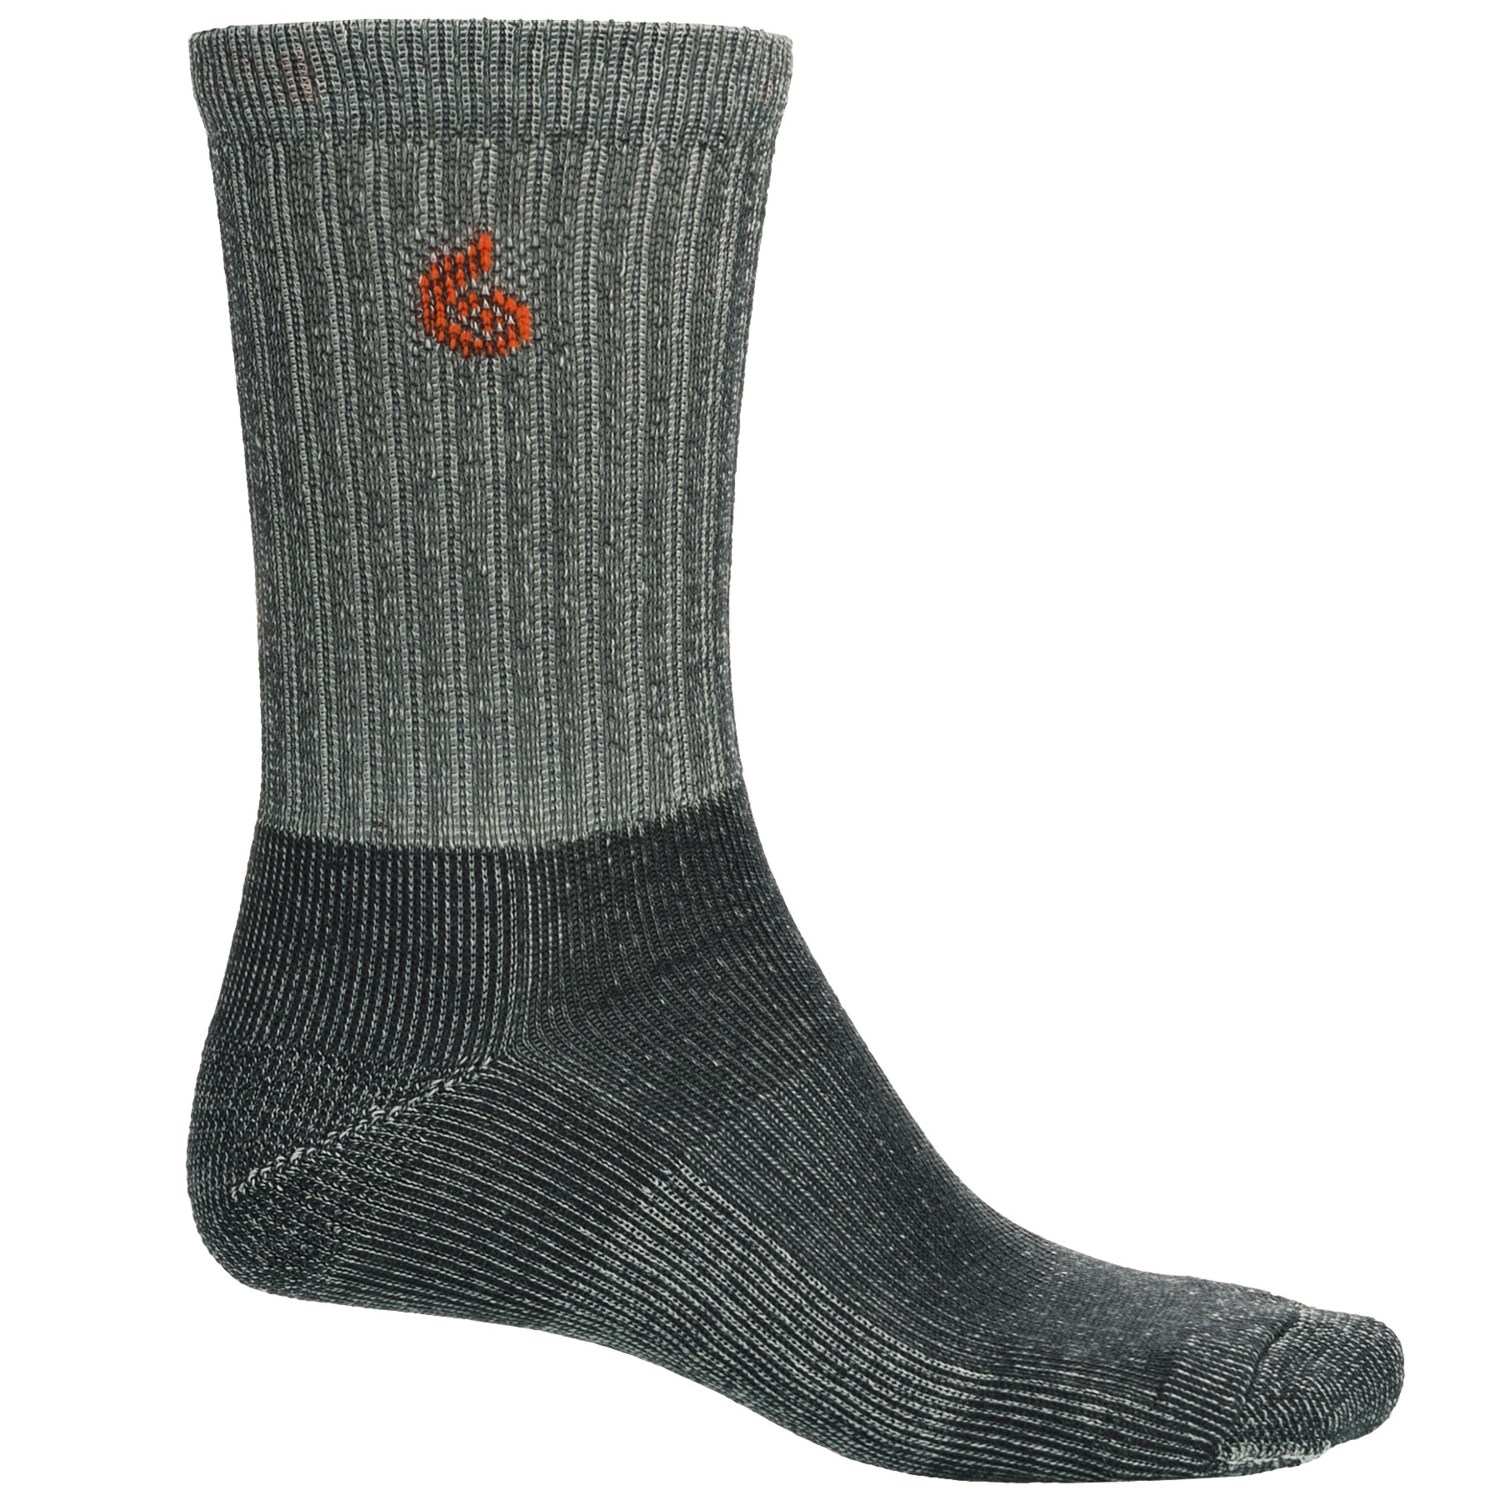 Point6 Core Hiking Socks – Merino Wool, Crew (For Men and Women)